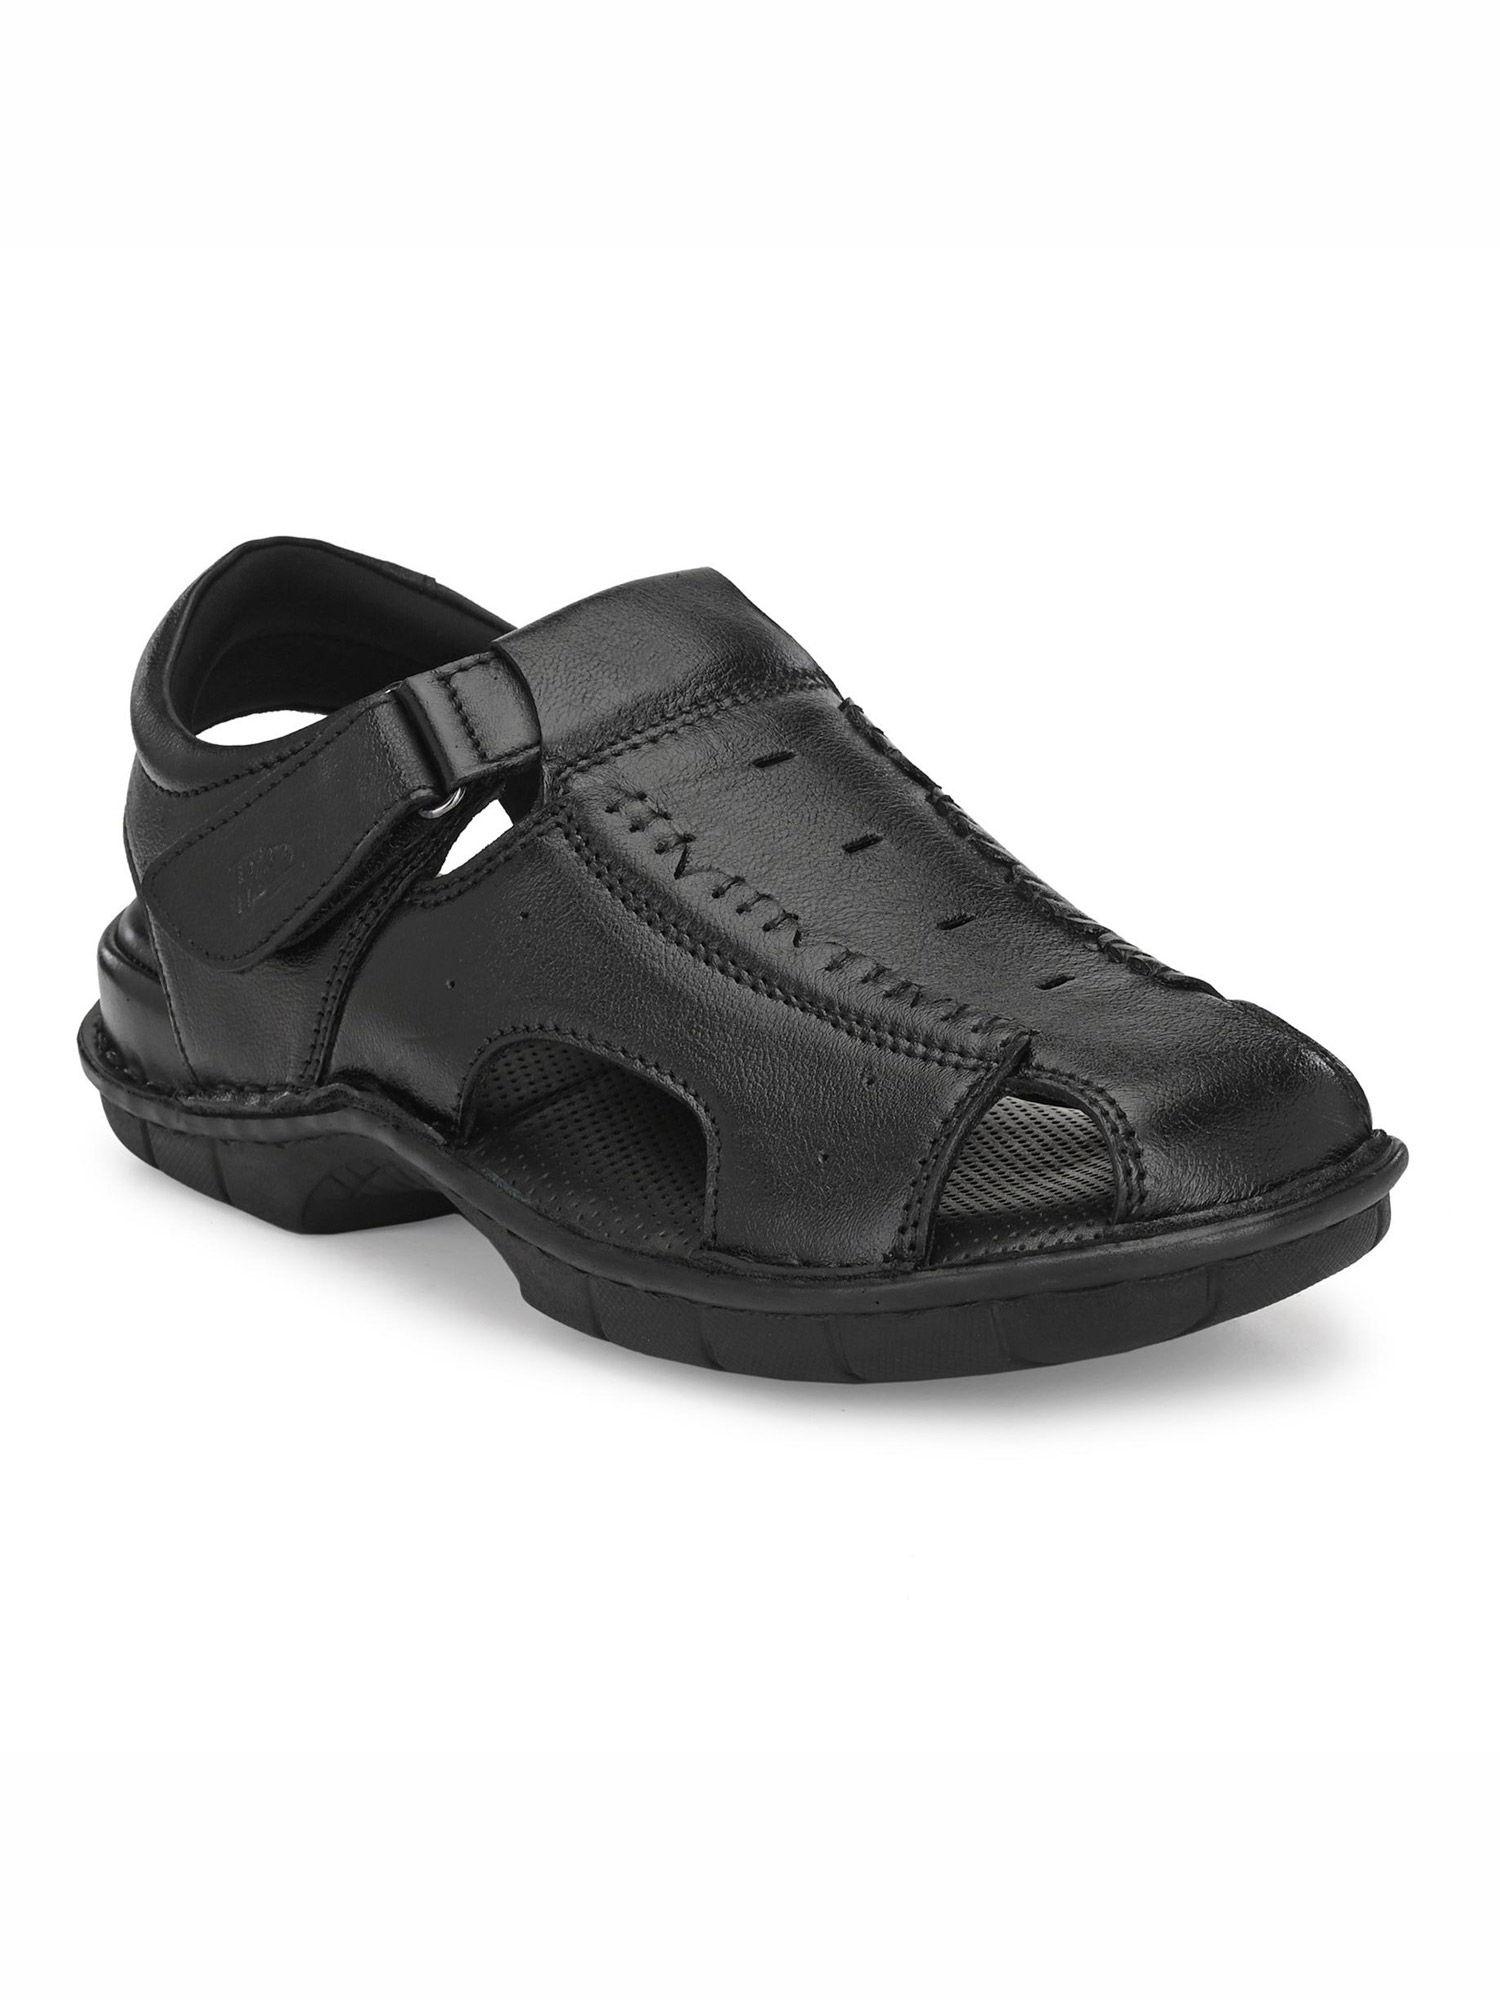 men's black leather comfort sandals with velcro closure